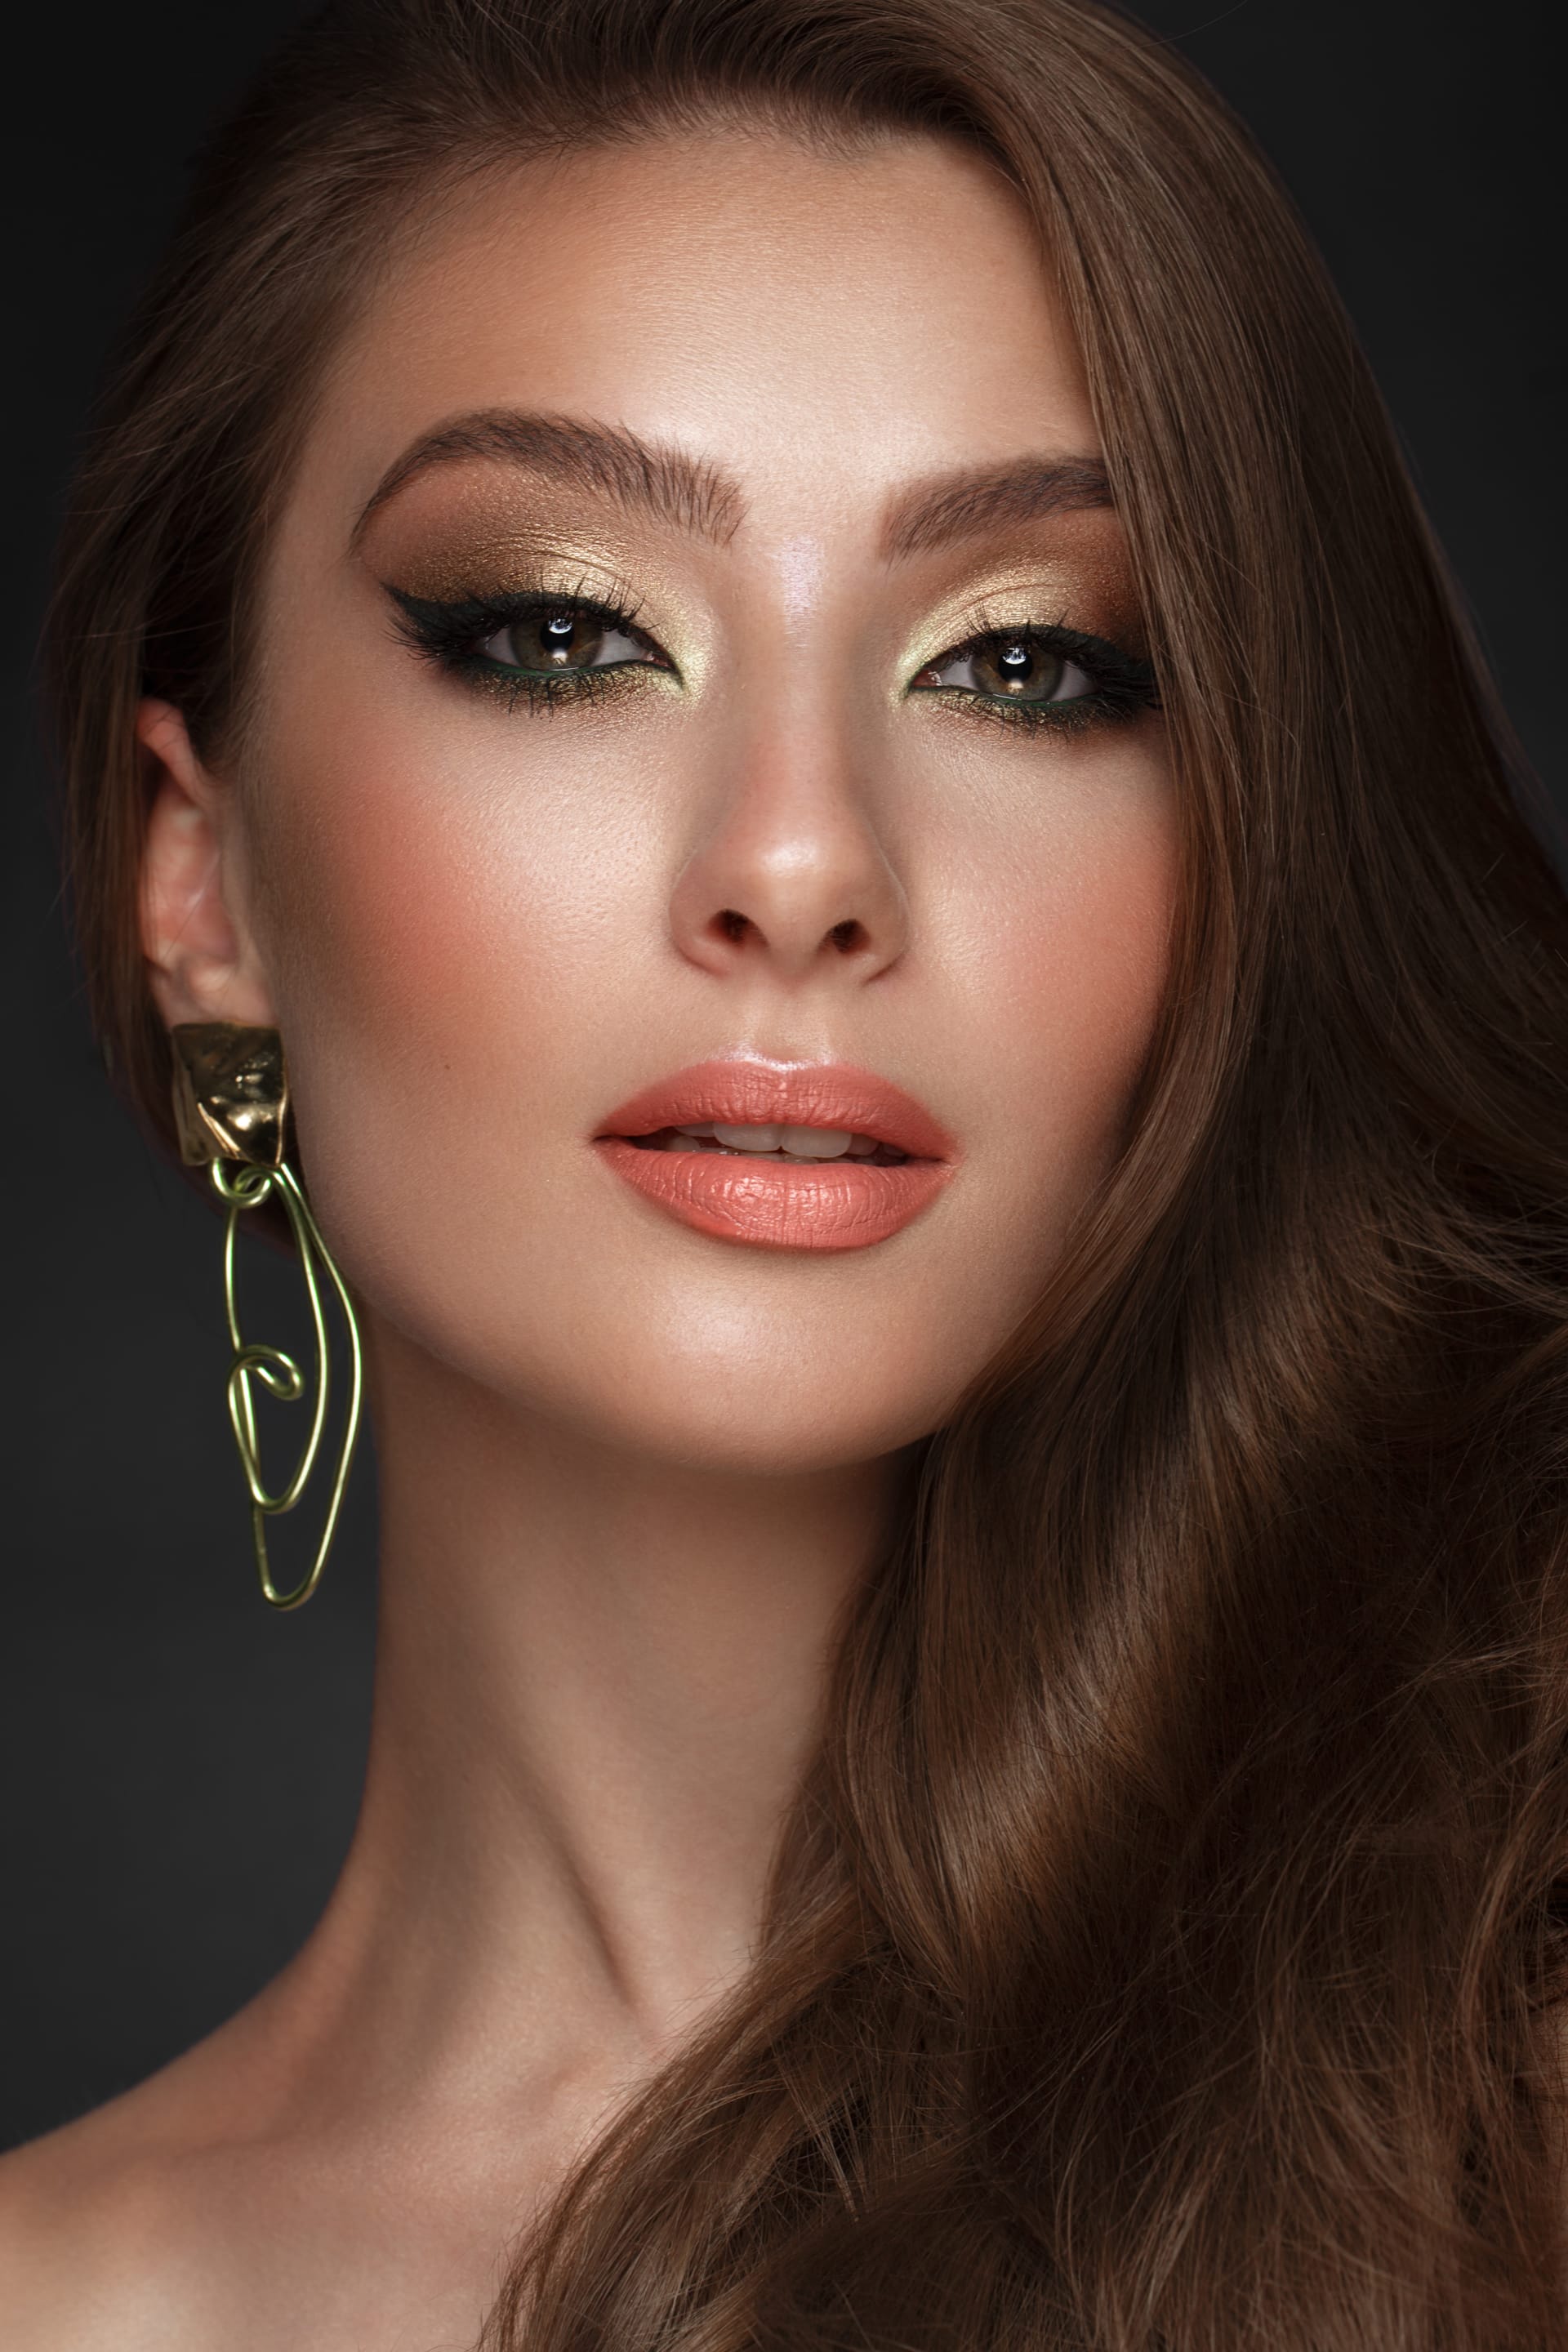 Fashionable makeup unusual gold accessories beauty face photo taken studio